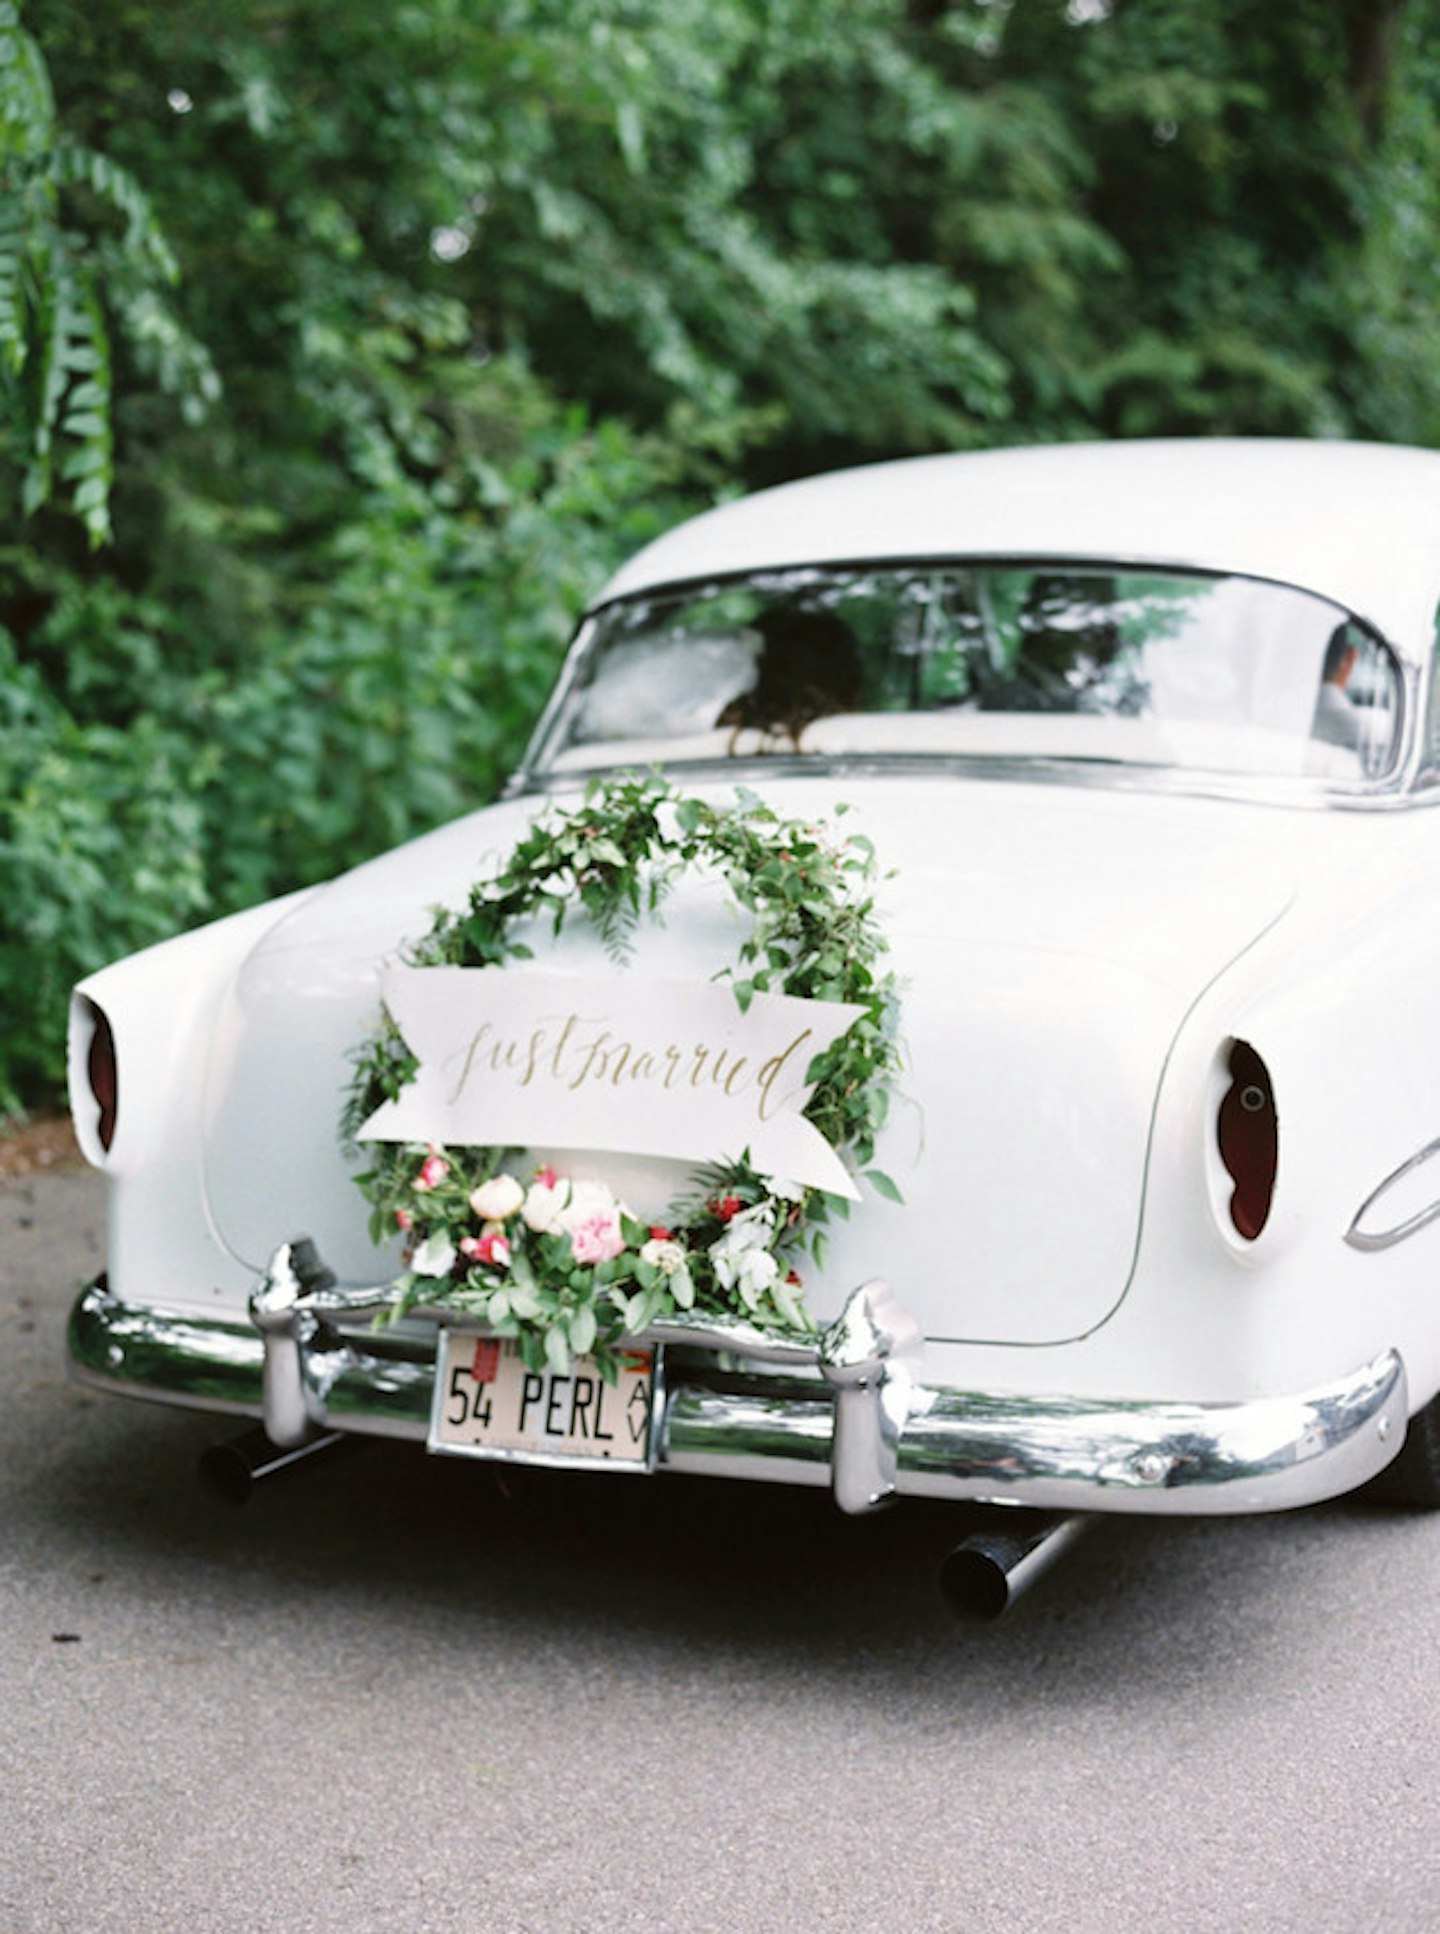 Wedding car decorations